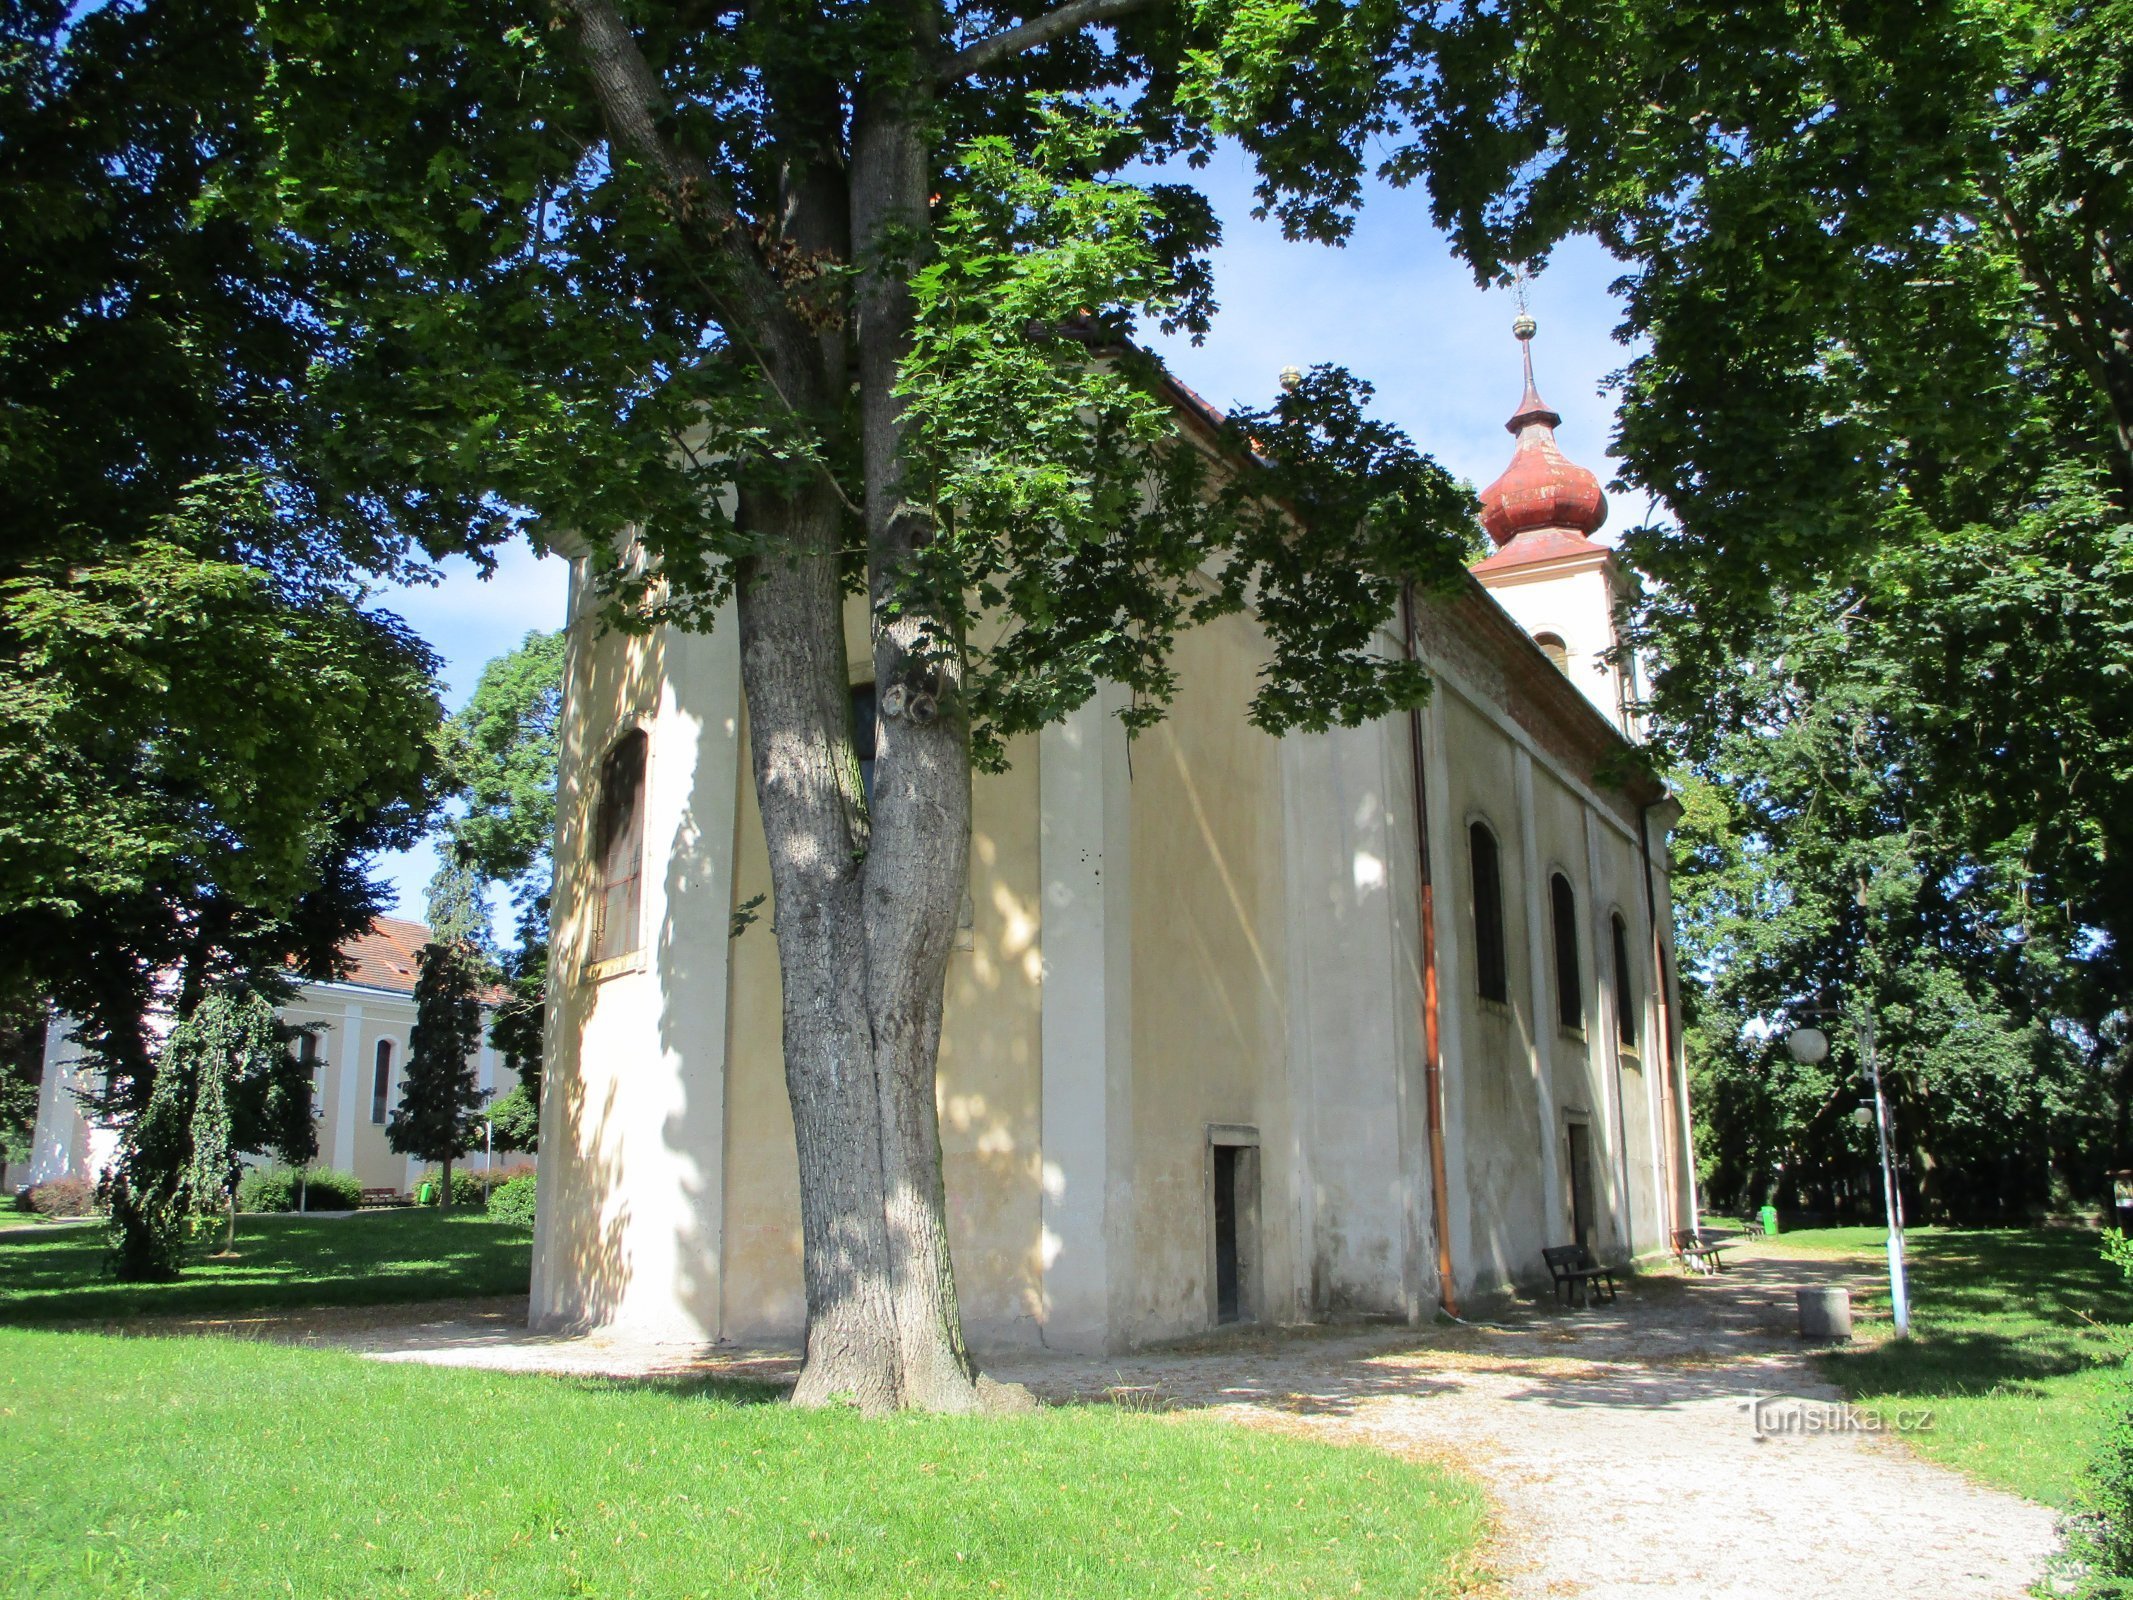 Den Hellige Treenigheds Kirke (Nový Bydžov, 5.7.2020. juli XNUMX)